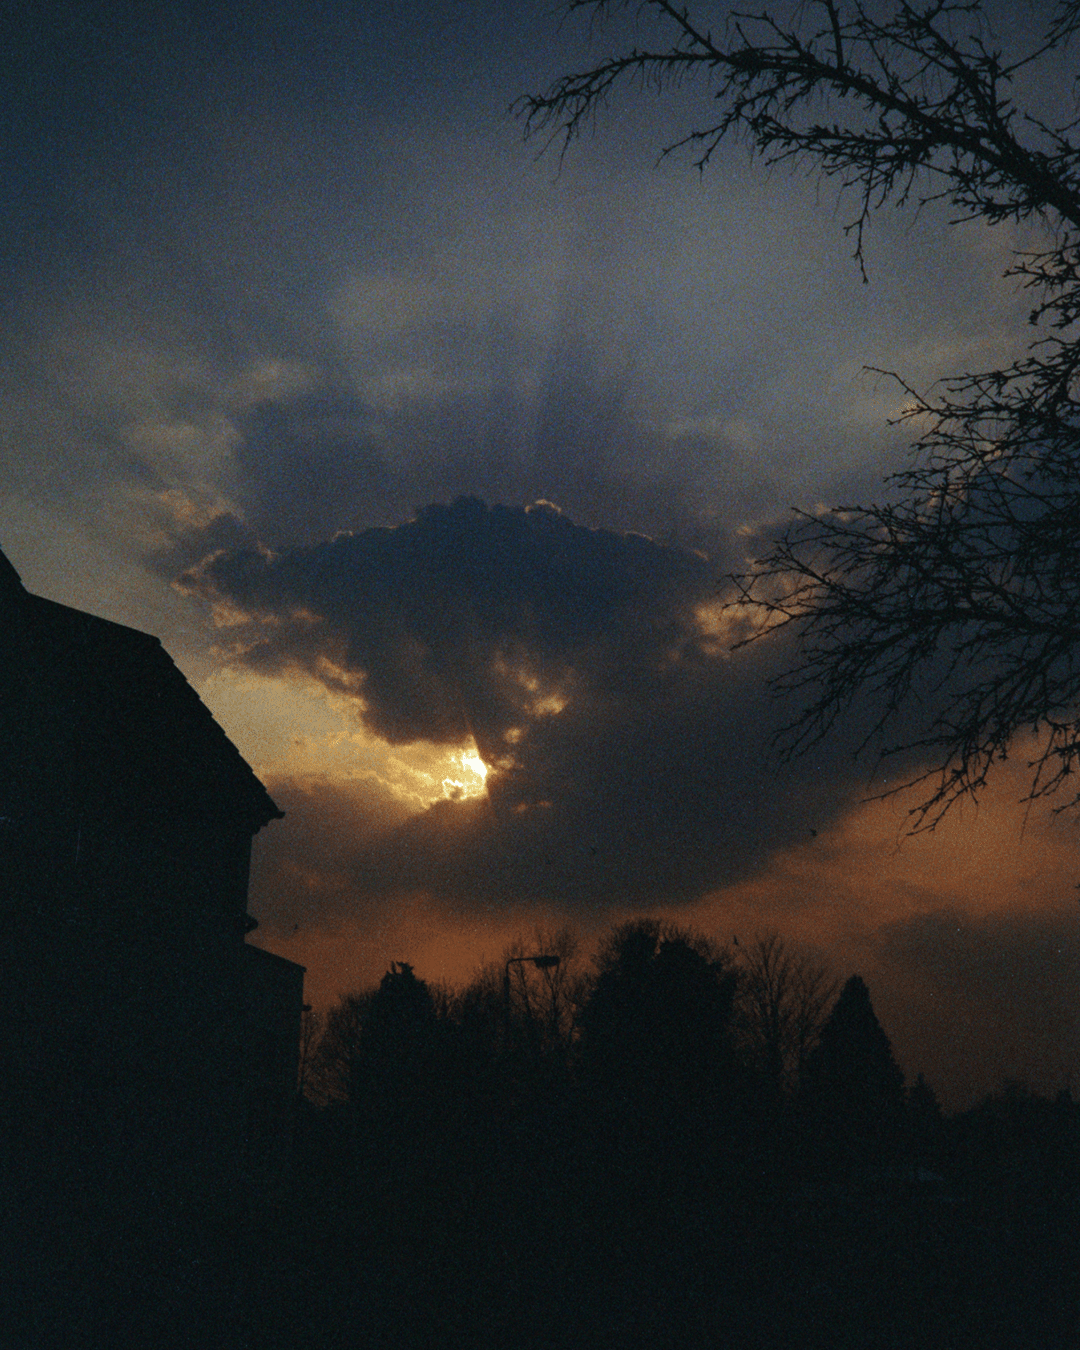 A moody dark sky, photography by Gemma Evans